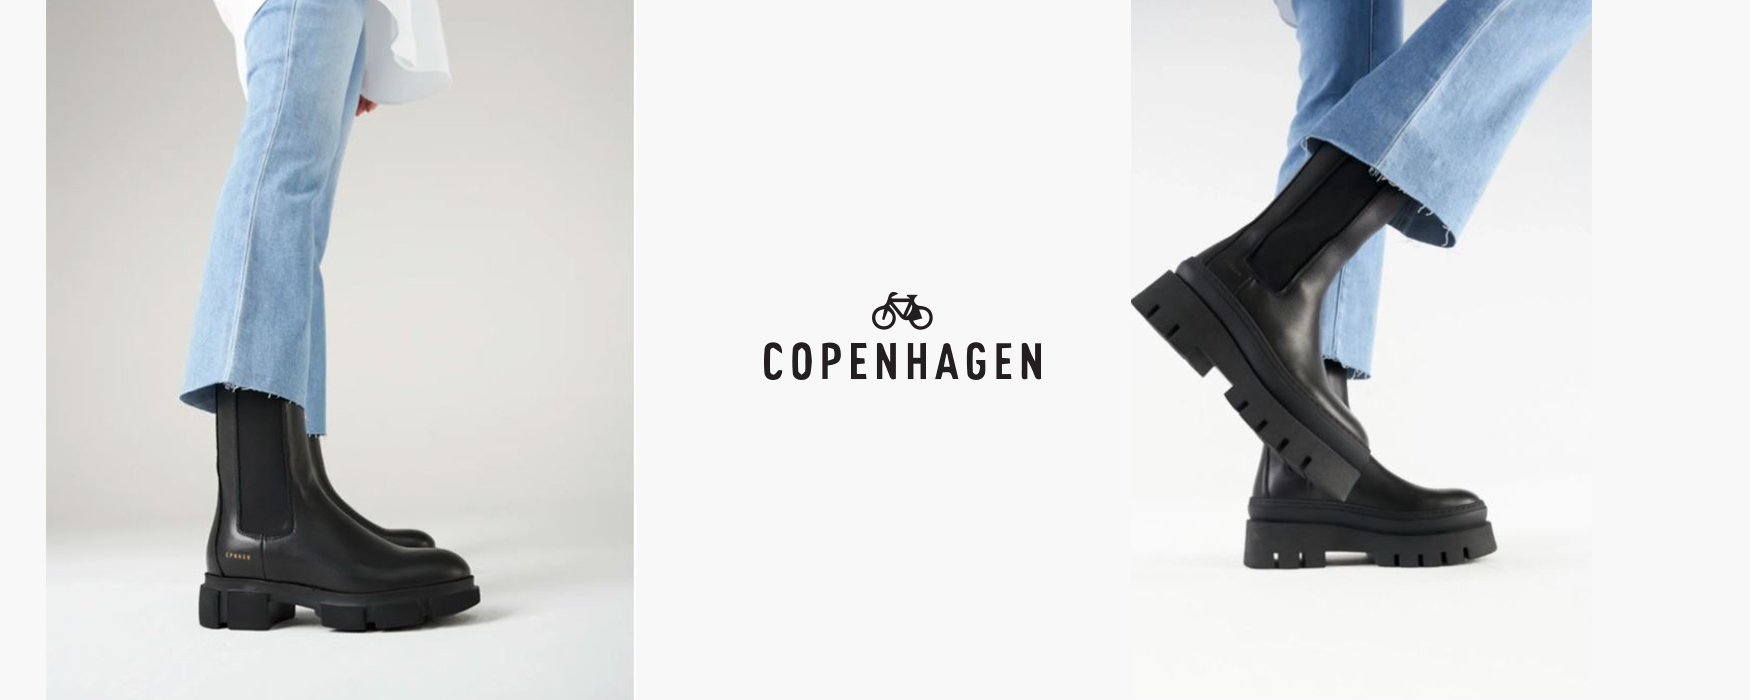 Copenhagen studio stivali da donna e sneakers cophenagen